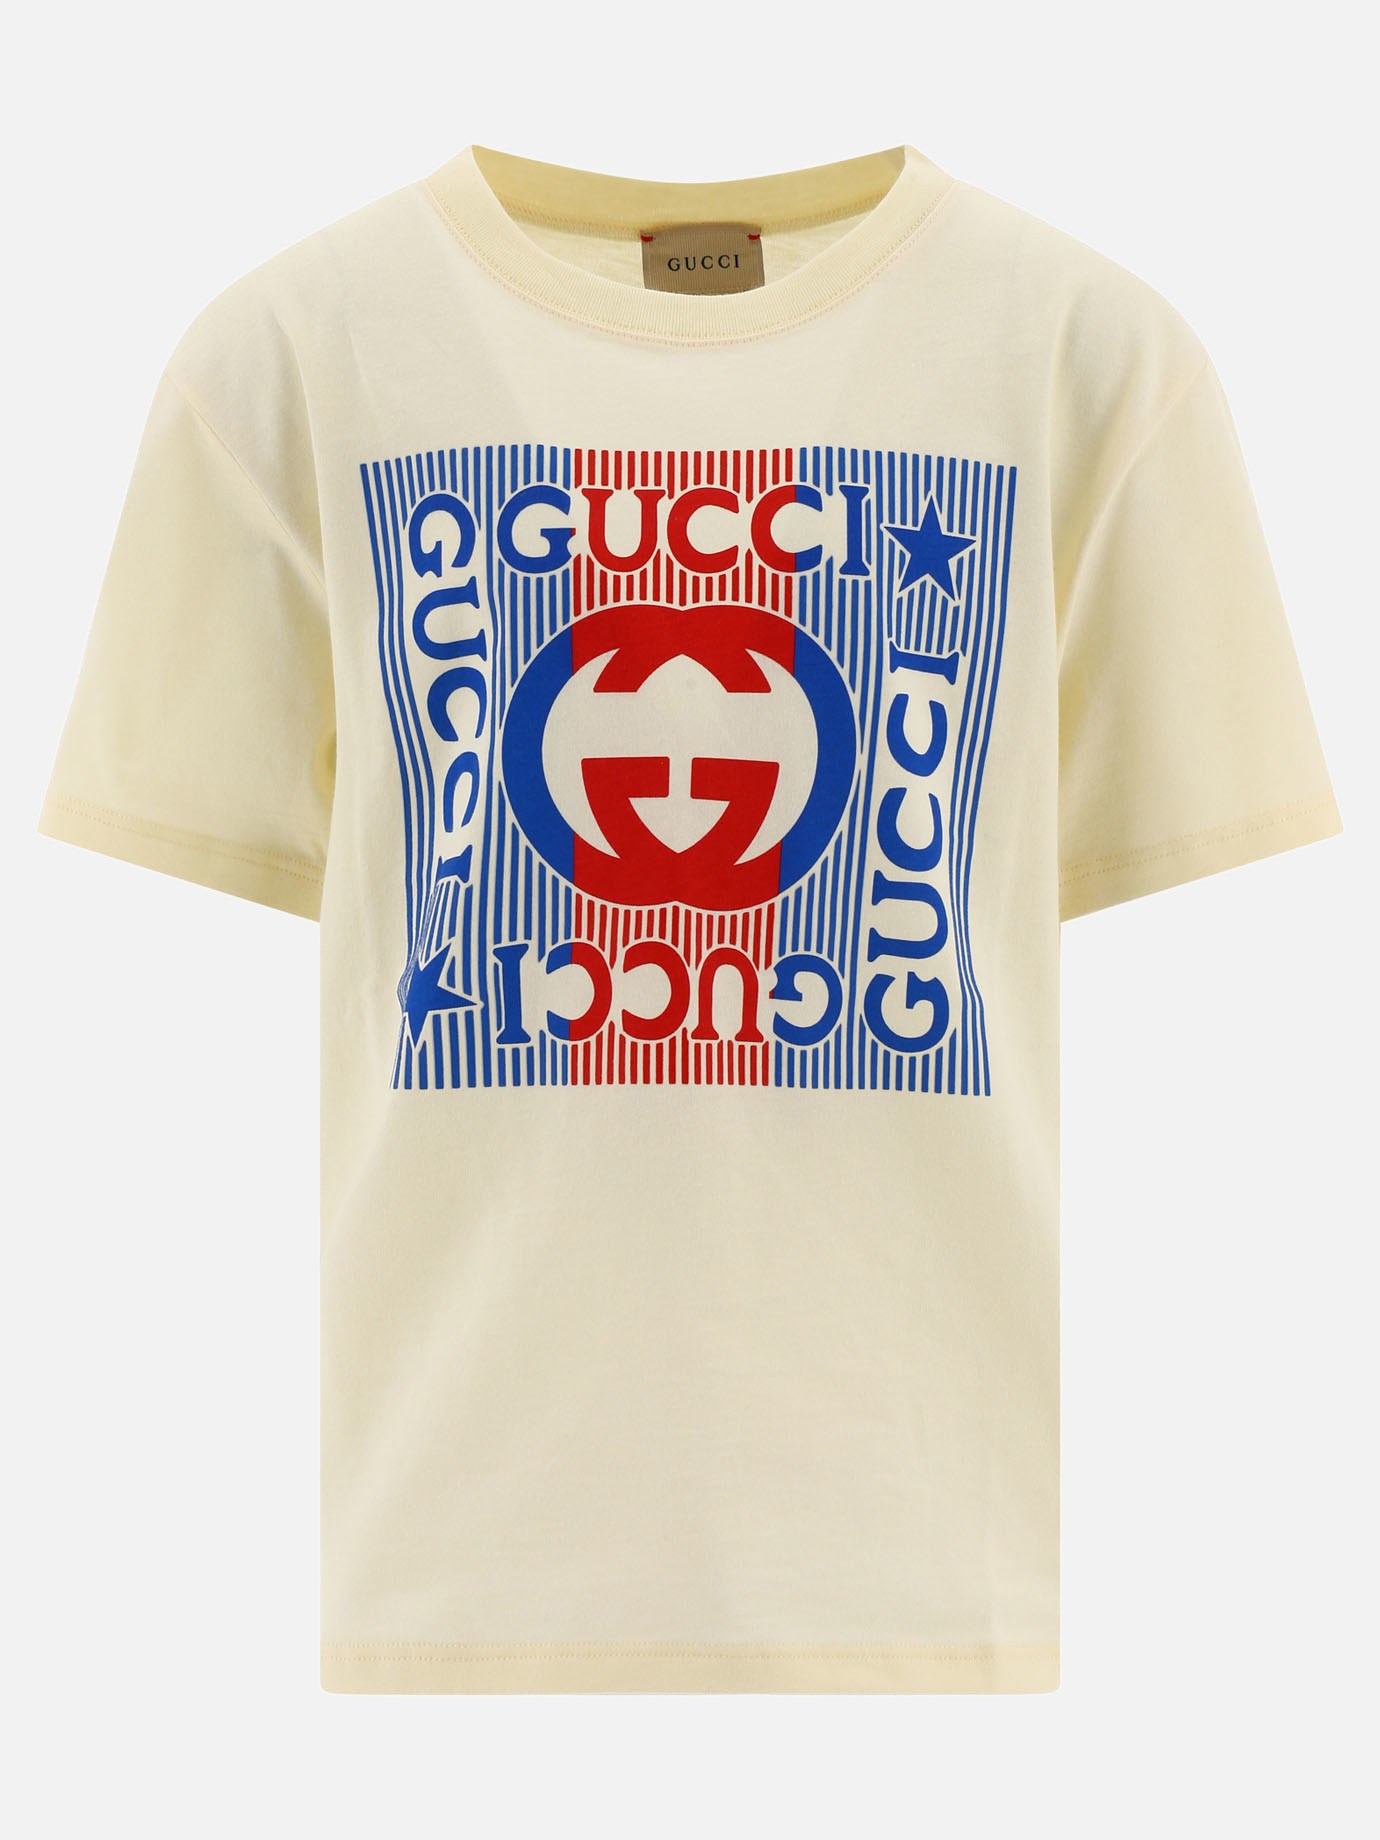  Gucci  t-shirt by Gucci Kids